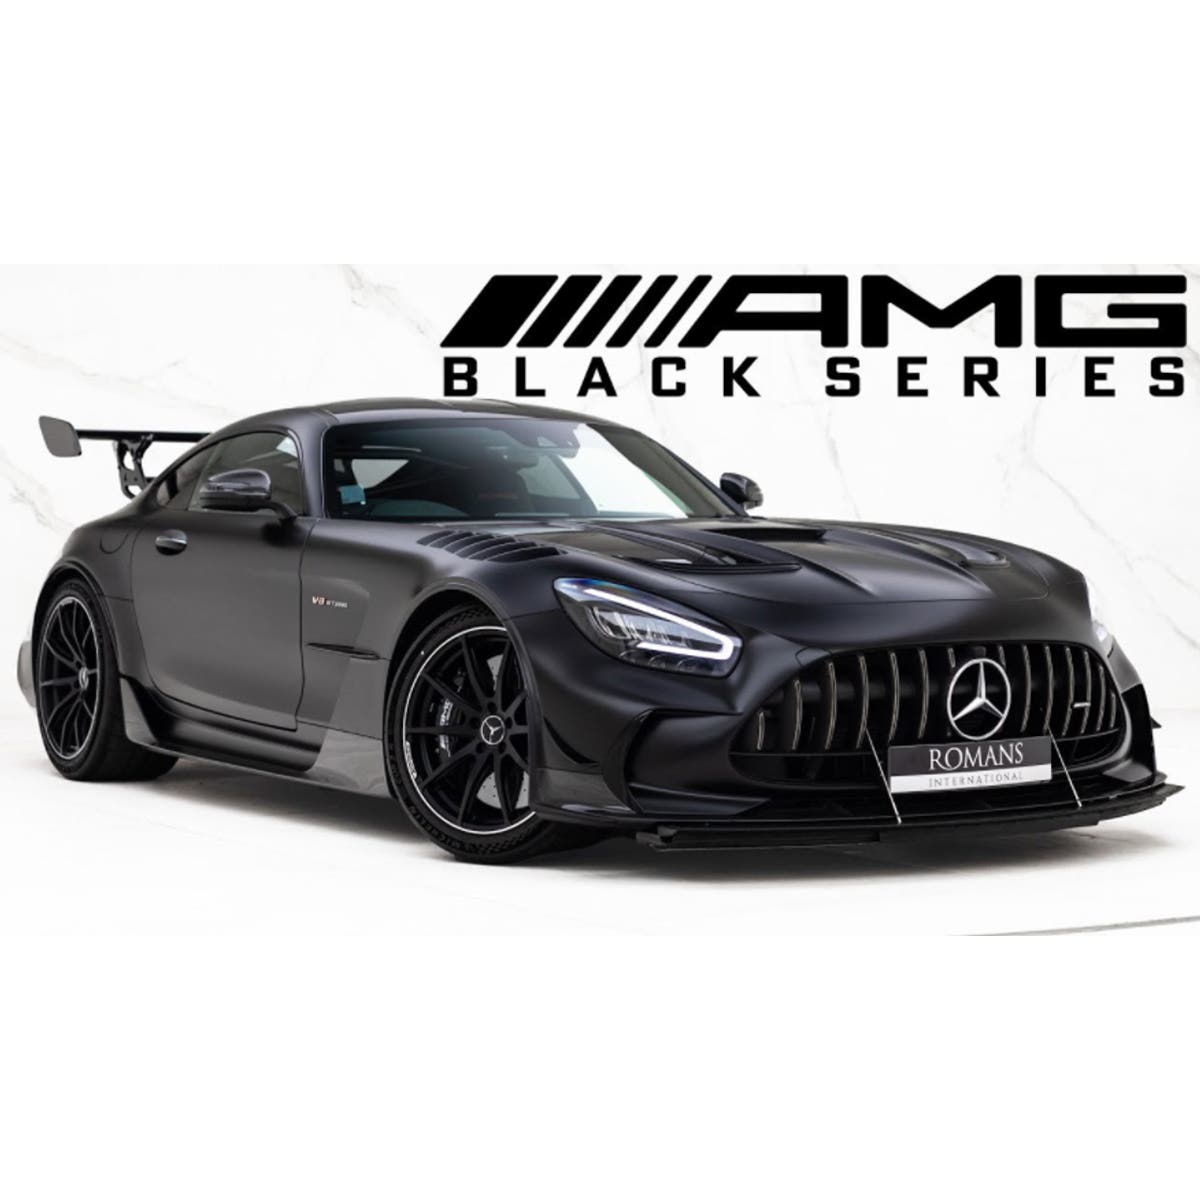 MERCEDES-AMG GT BLACK SERIES - 2020 - BLACK METALLIC - 1:18 Scale Diecast Model Car